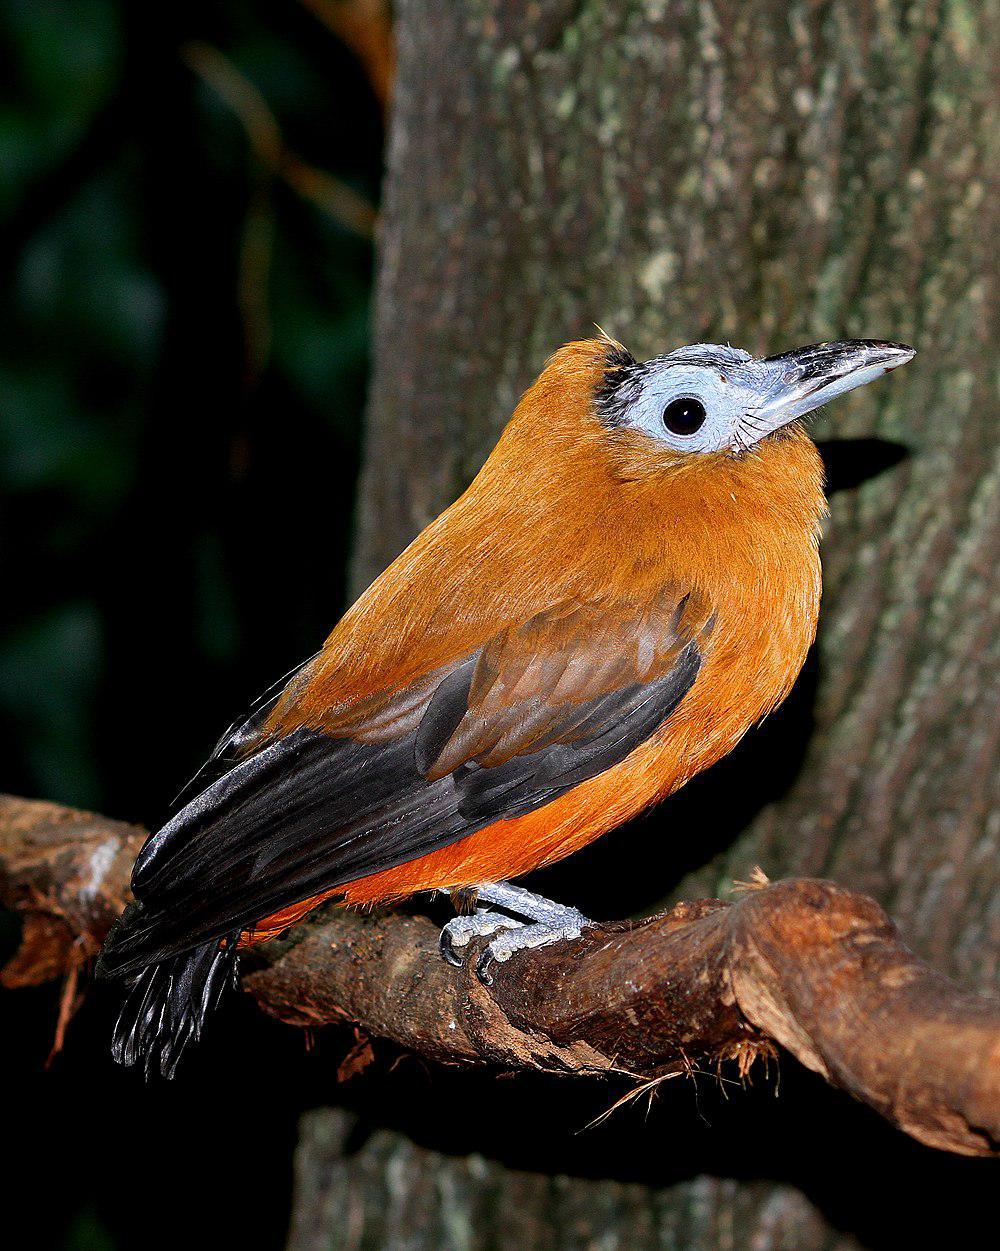 三色伞鸟 / Capuchinbird / Perissocephalus tricolor